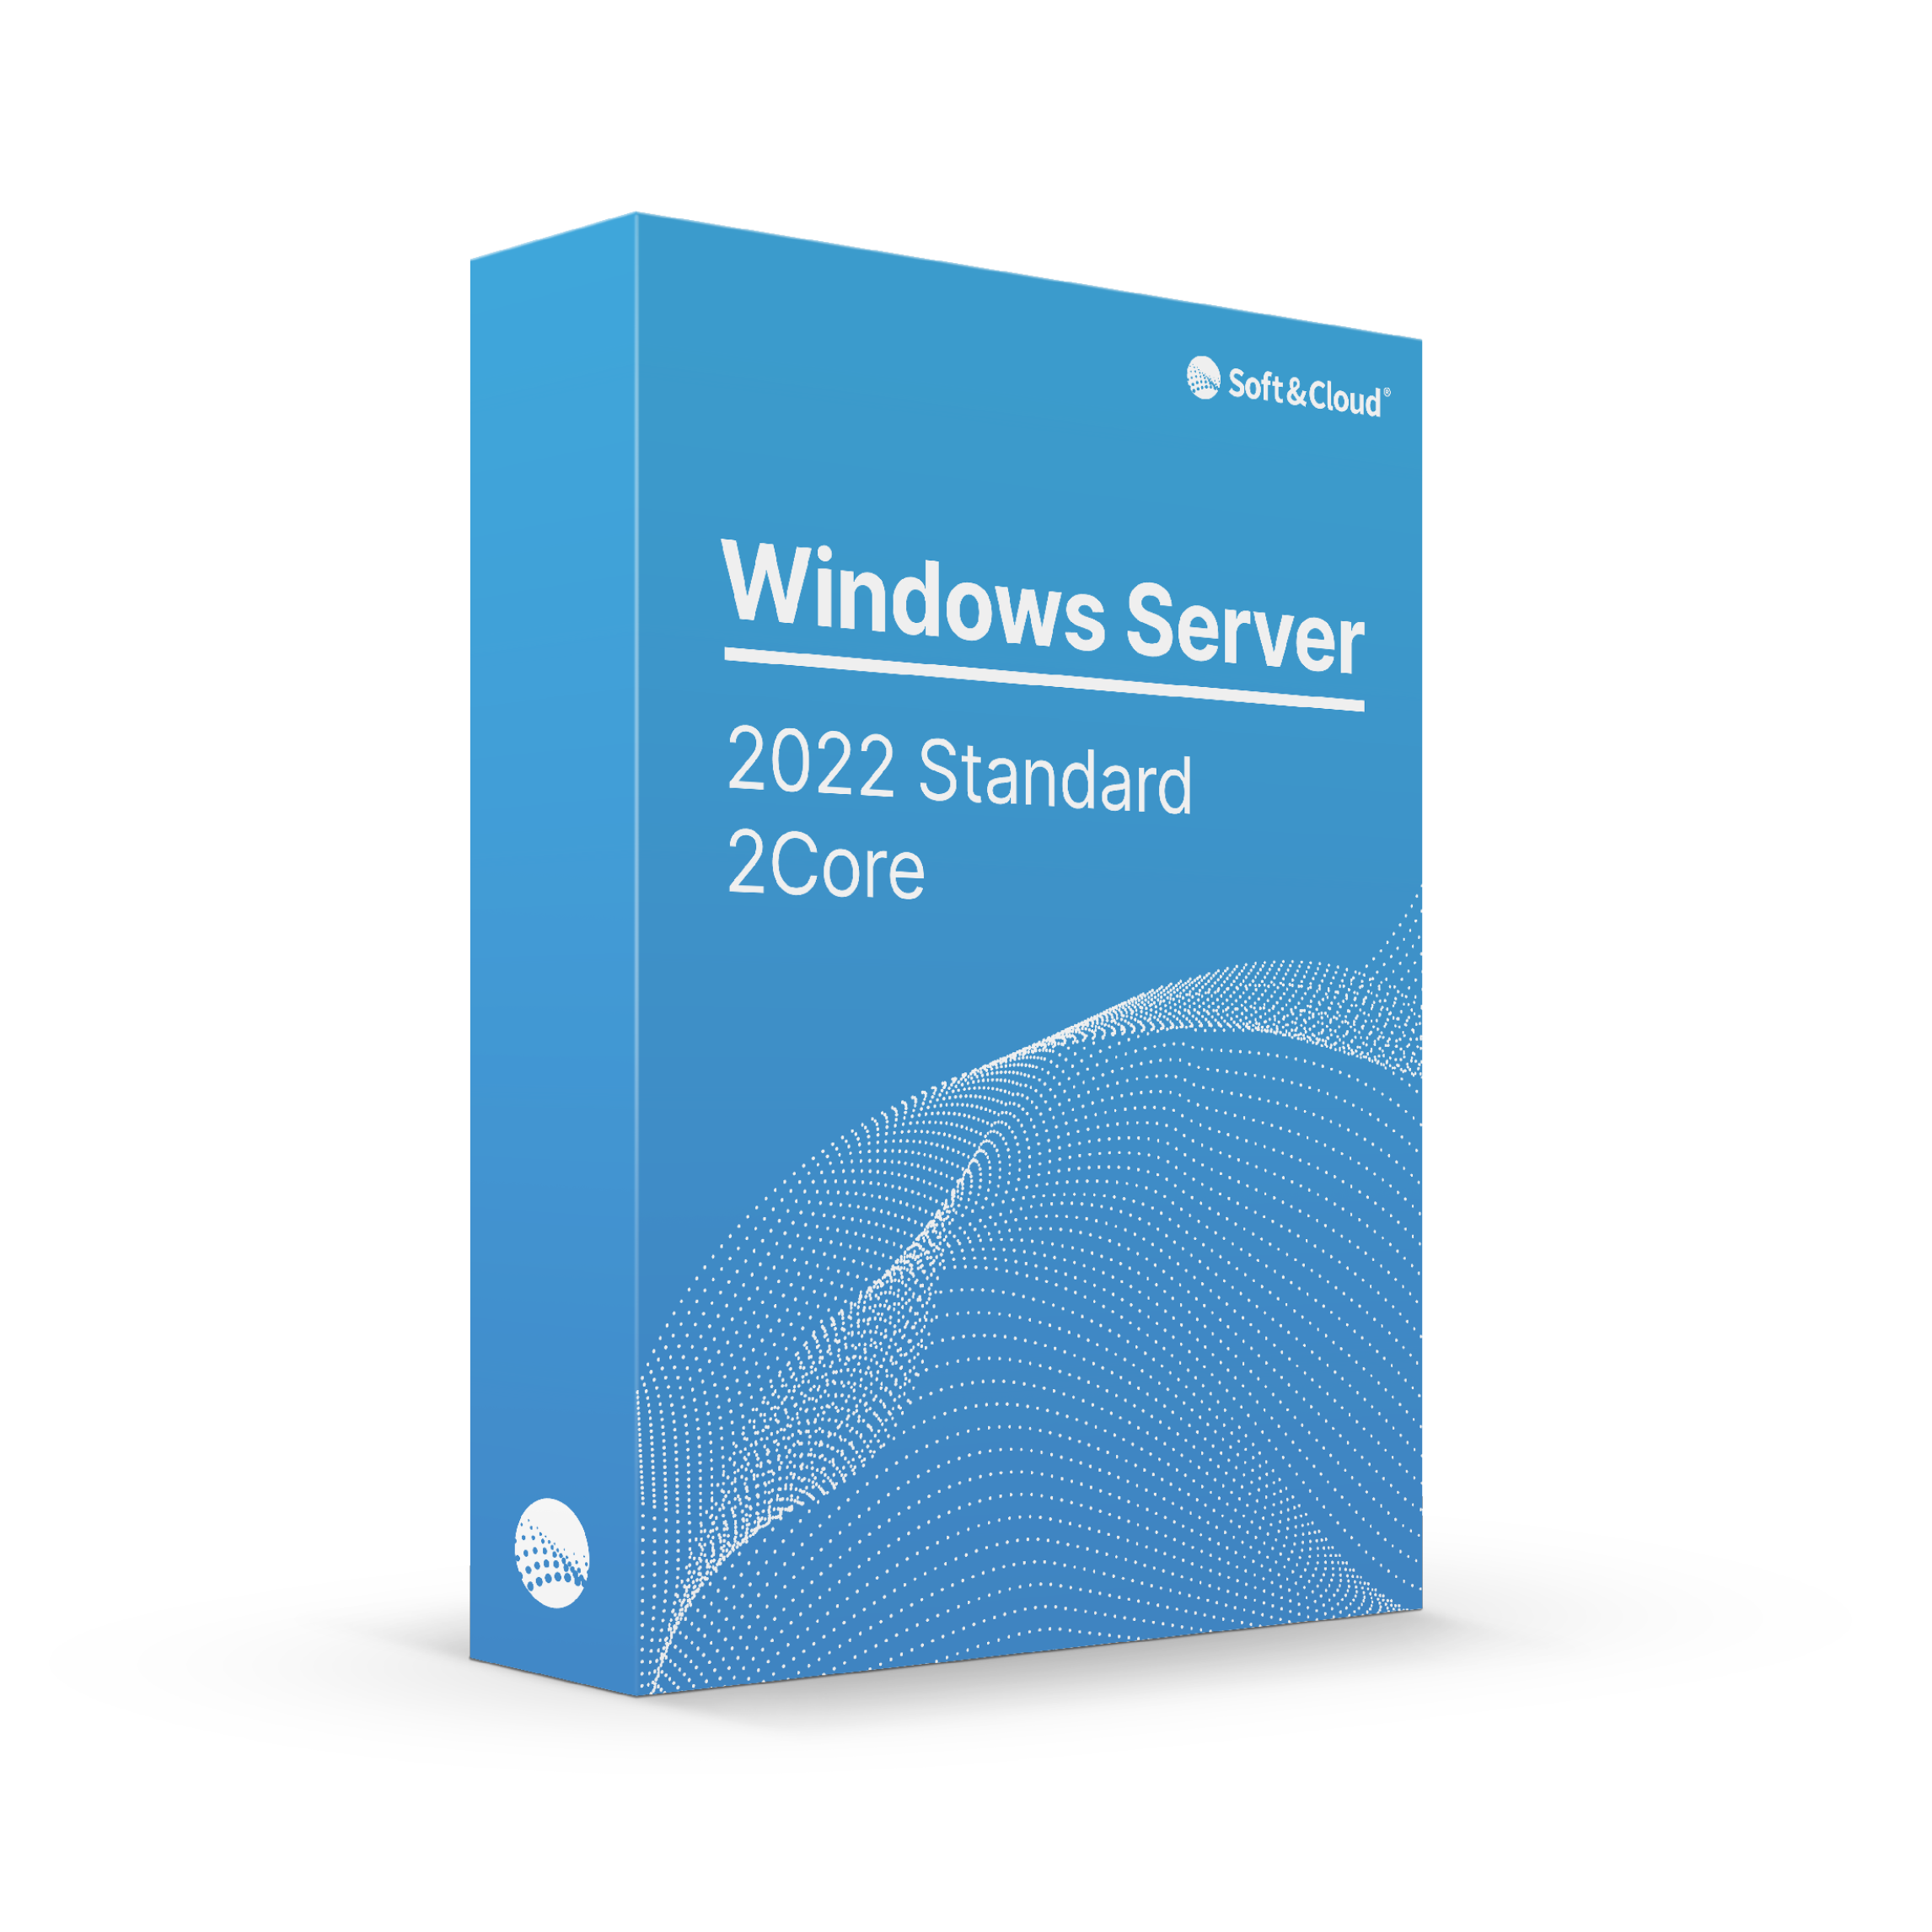 Windows Server 2022 Standard 2Core